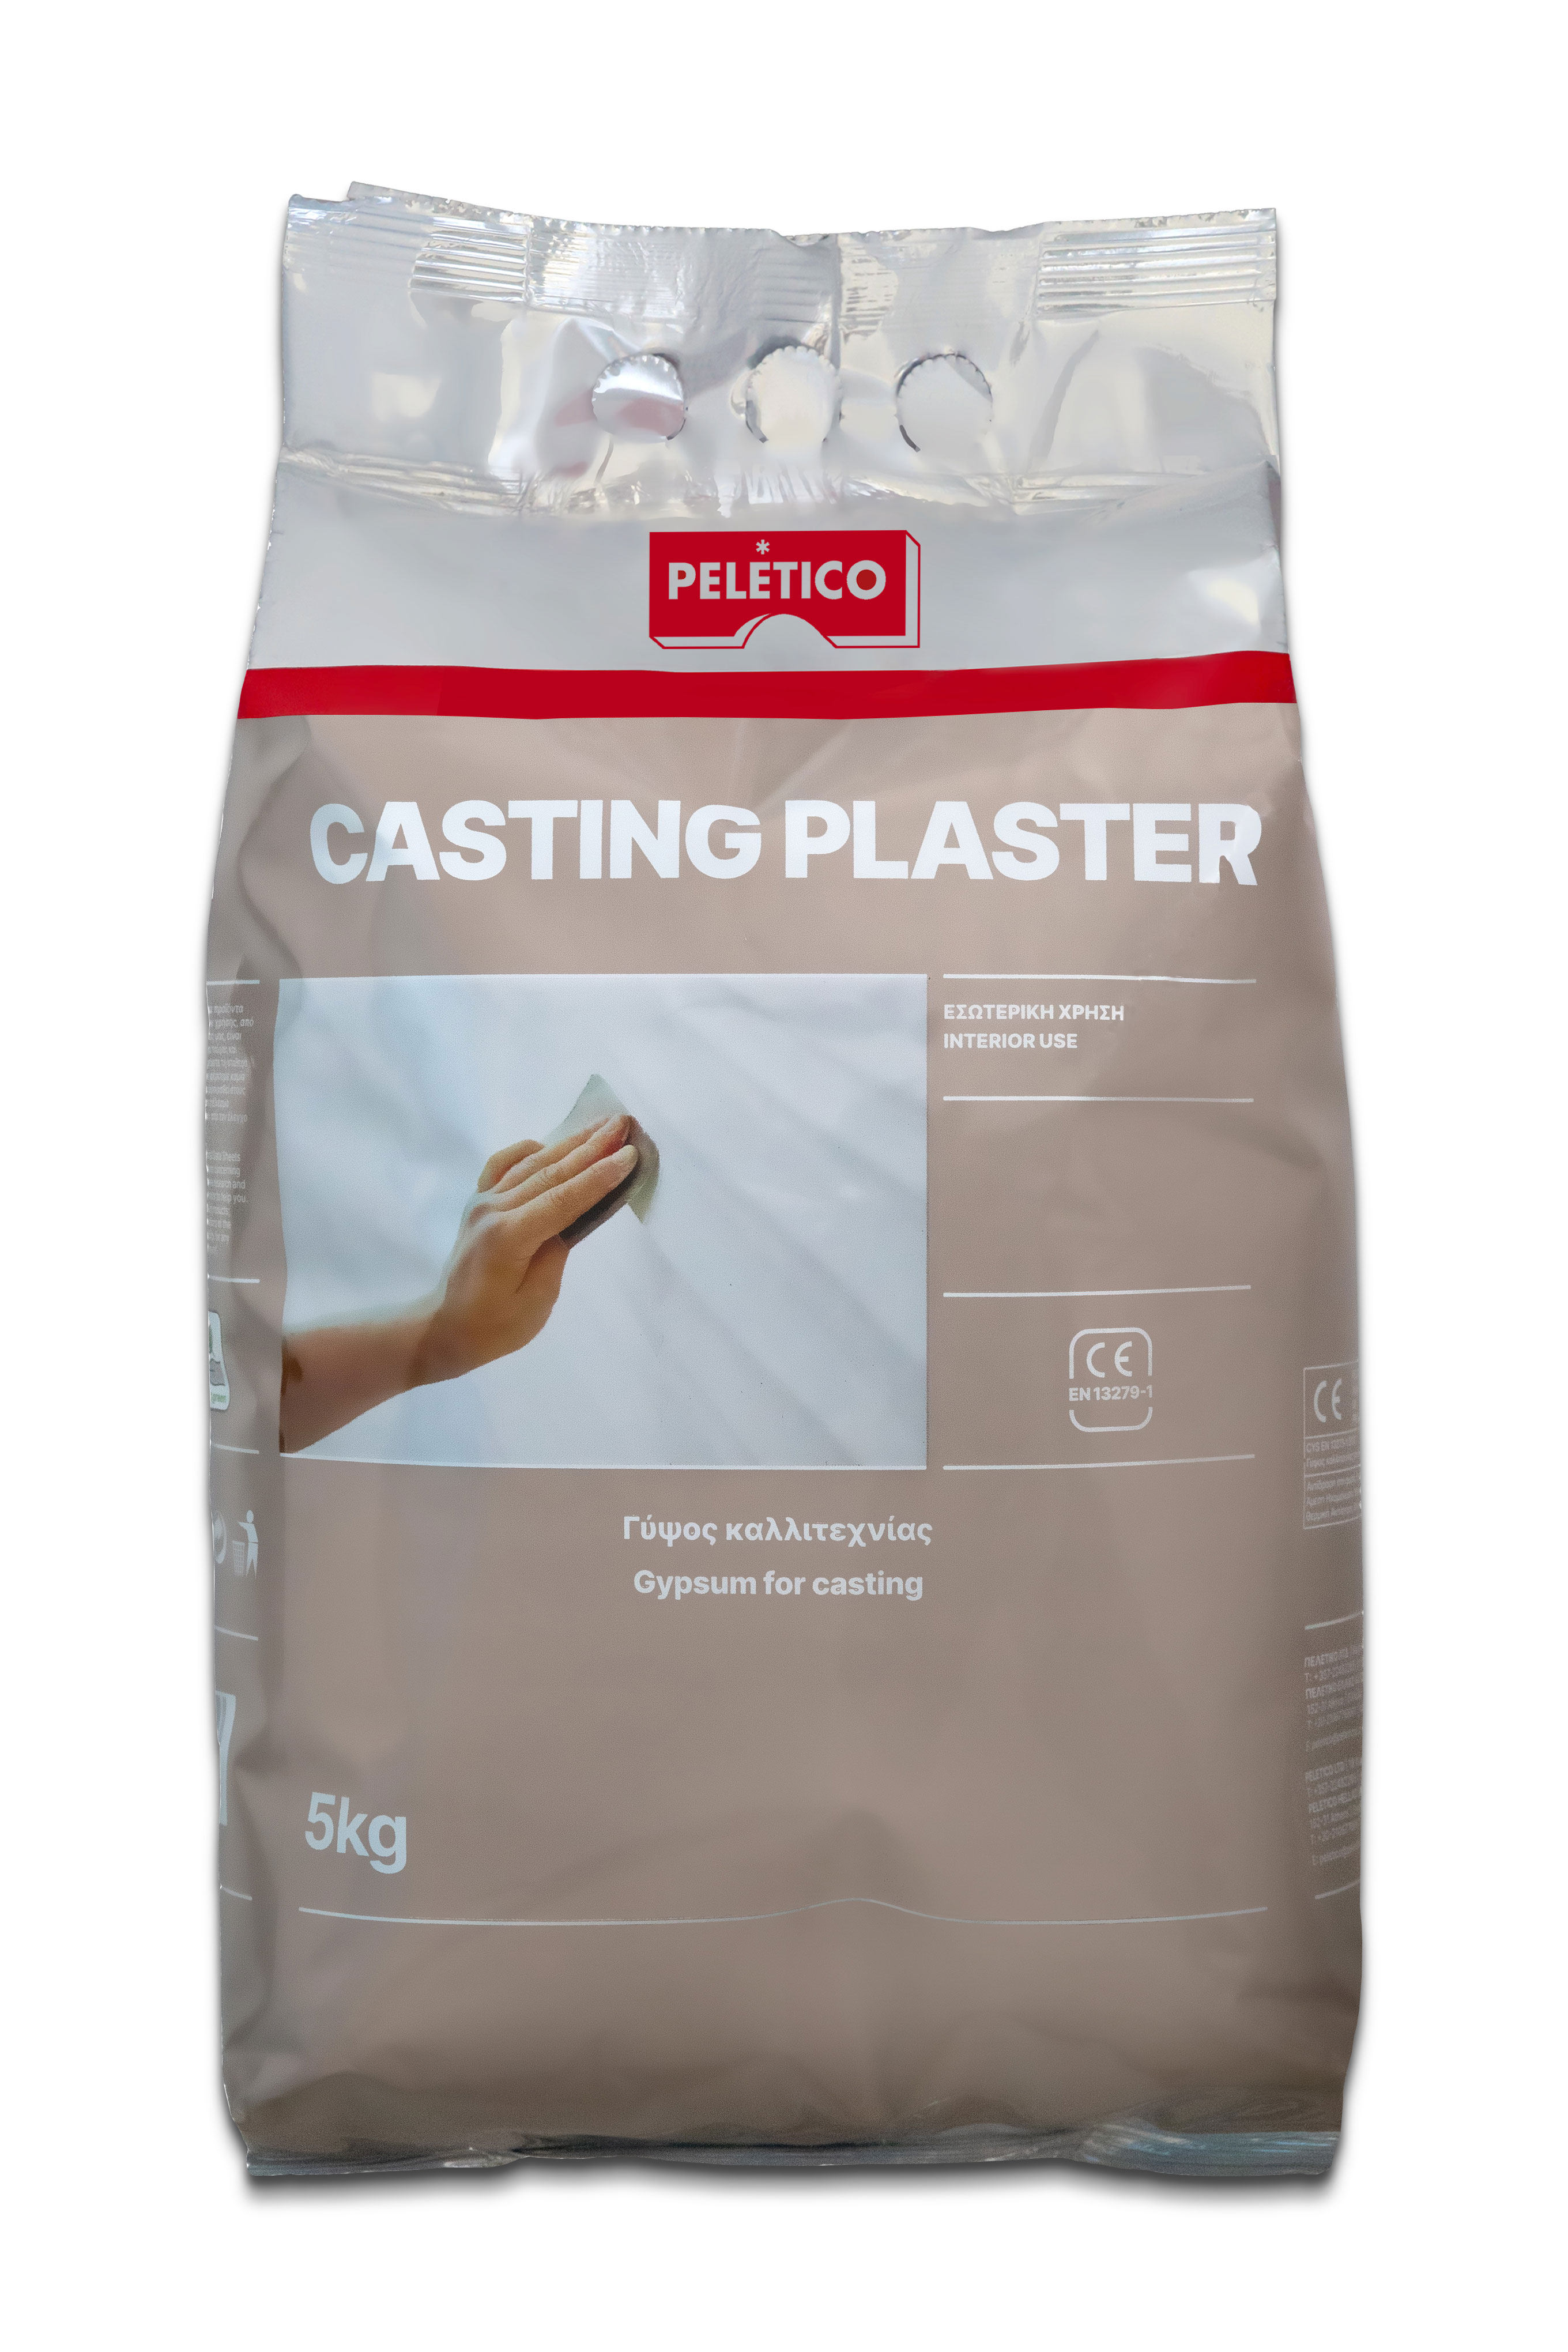 PELETICO CASTING PLASTER 5KG